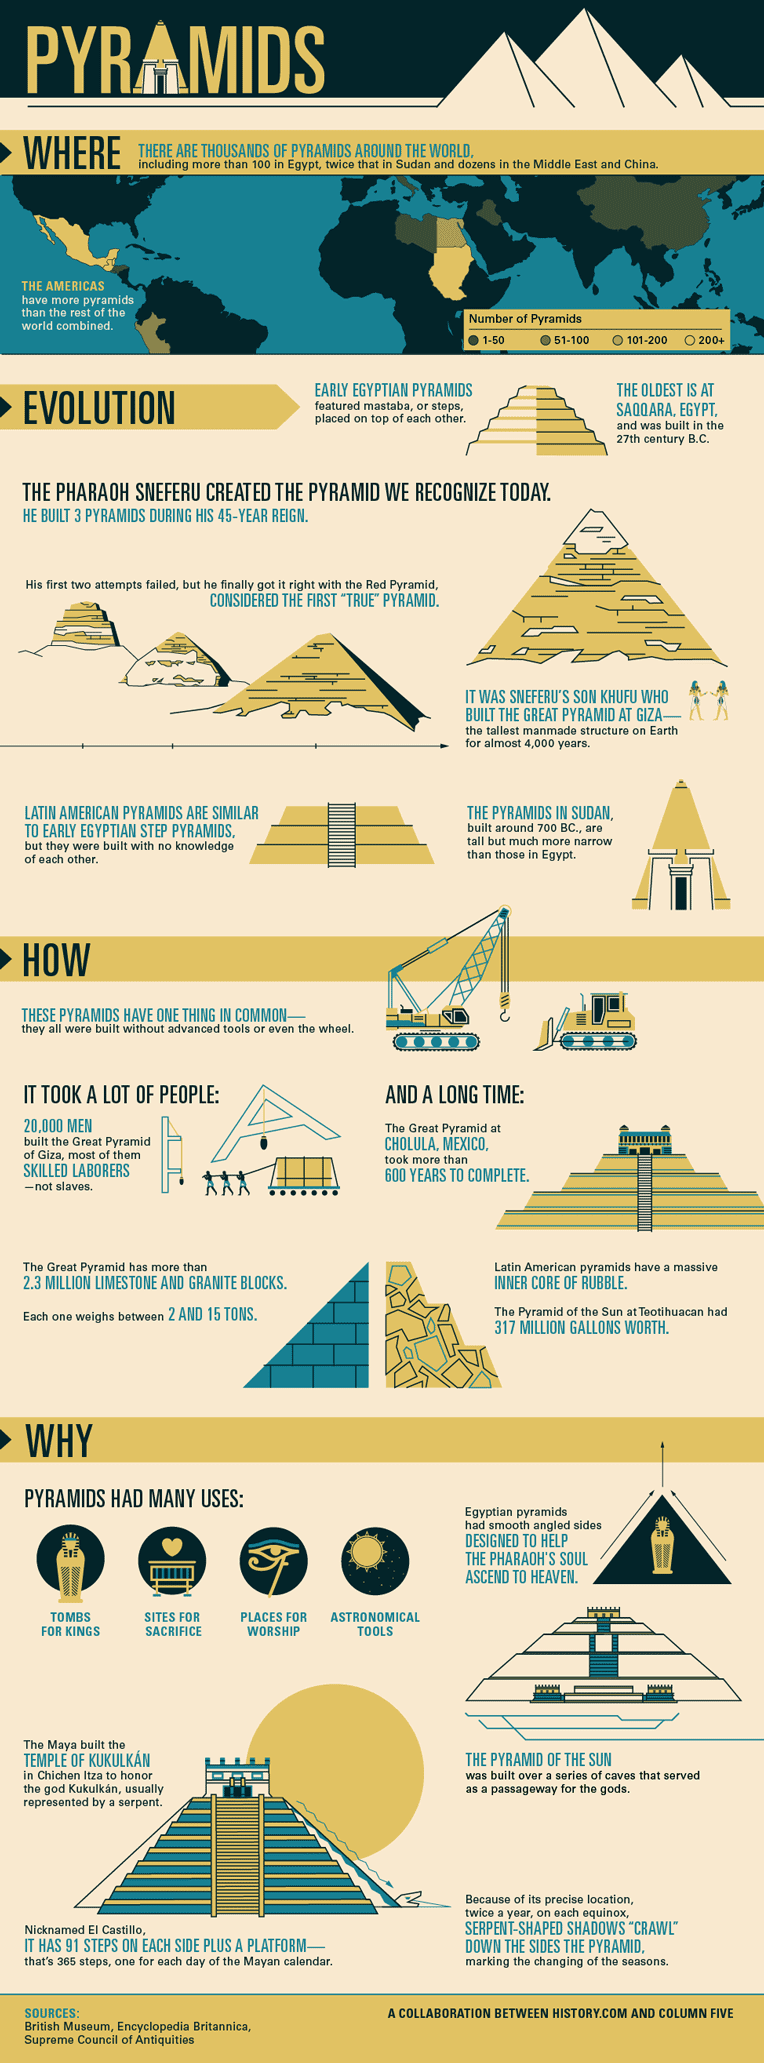 History of Pyramids